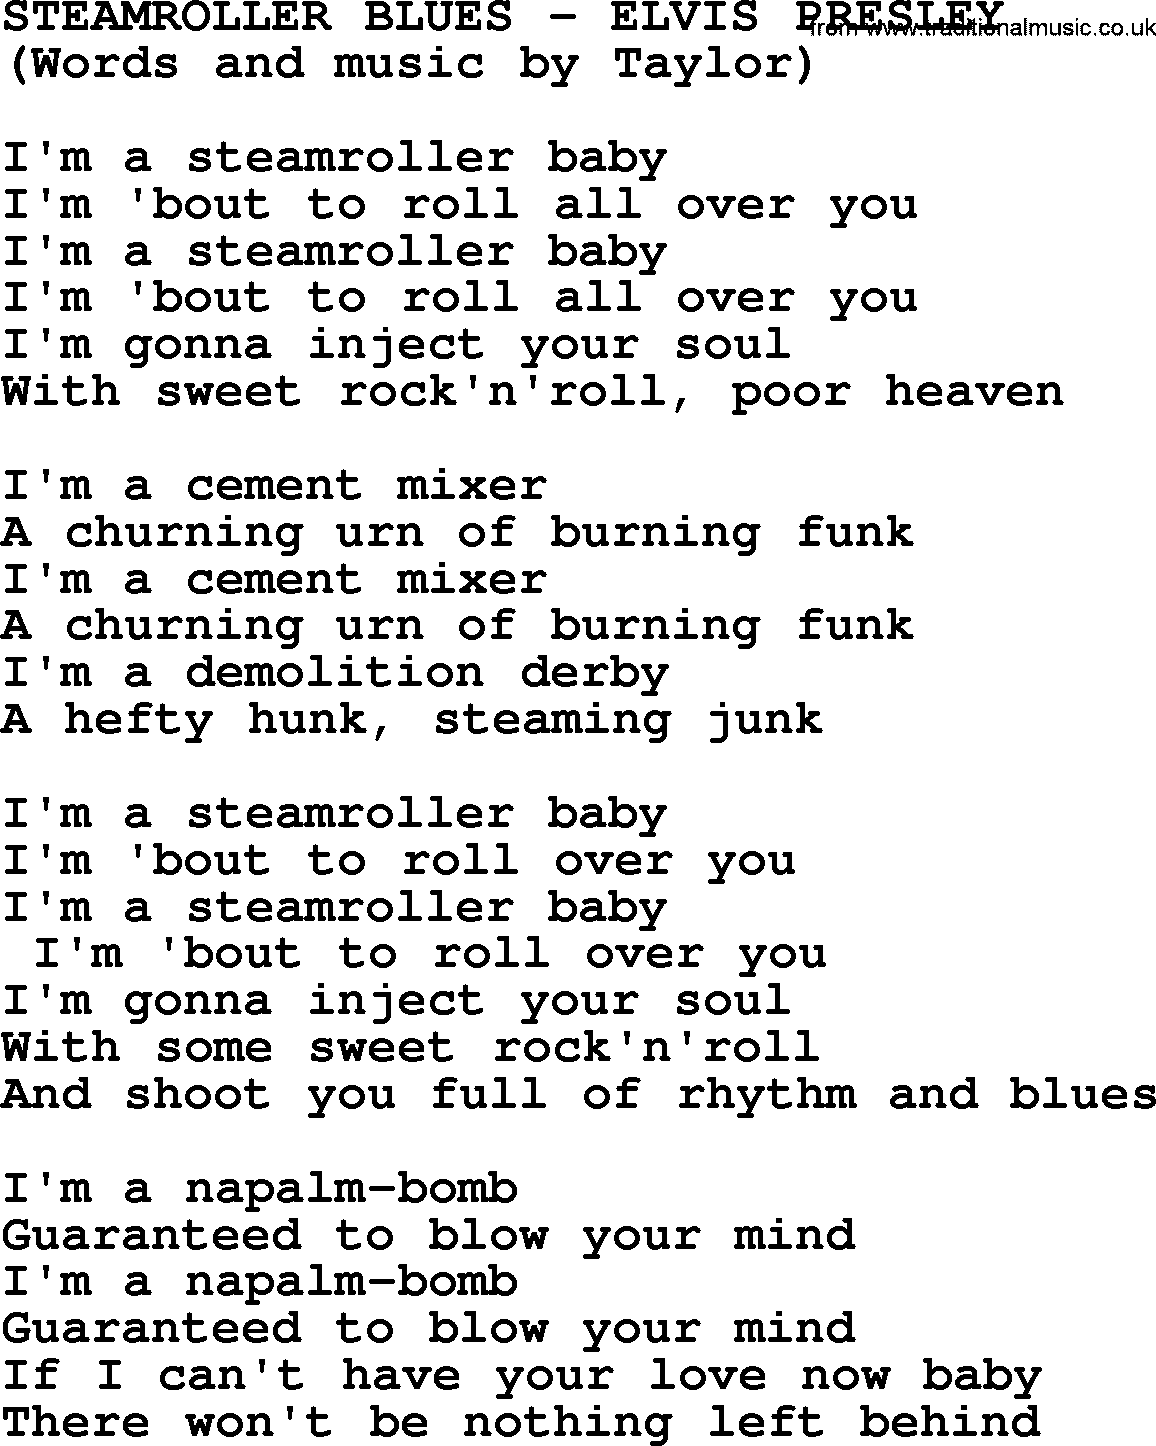 Elvis Presley song: Steamroller Blues lyrics